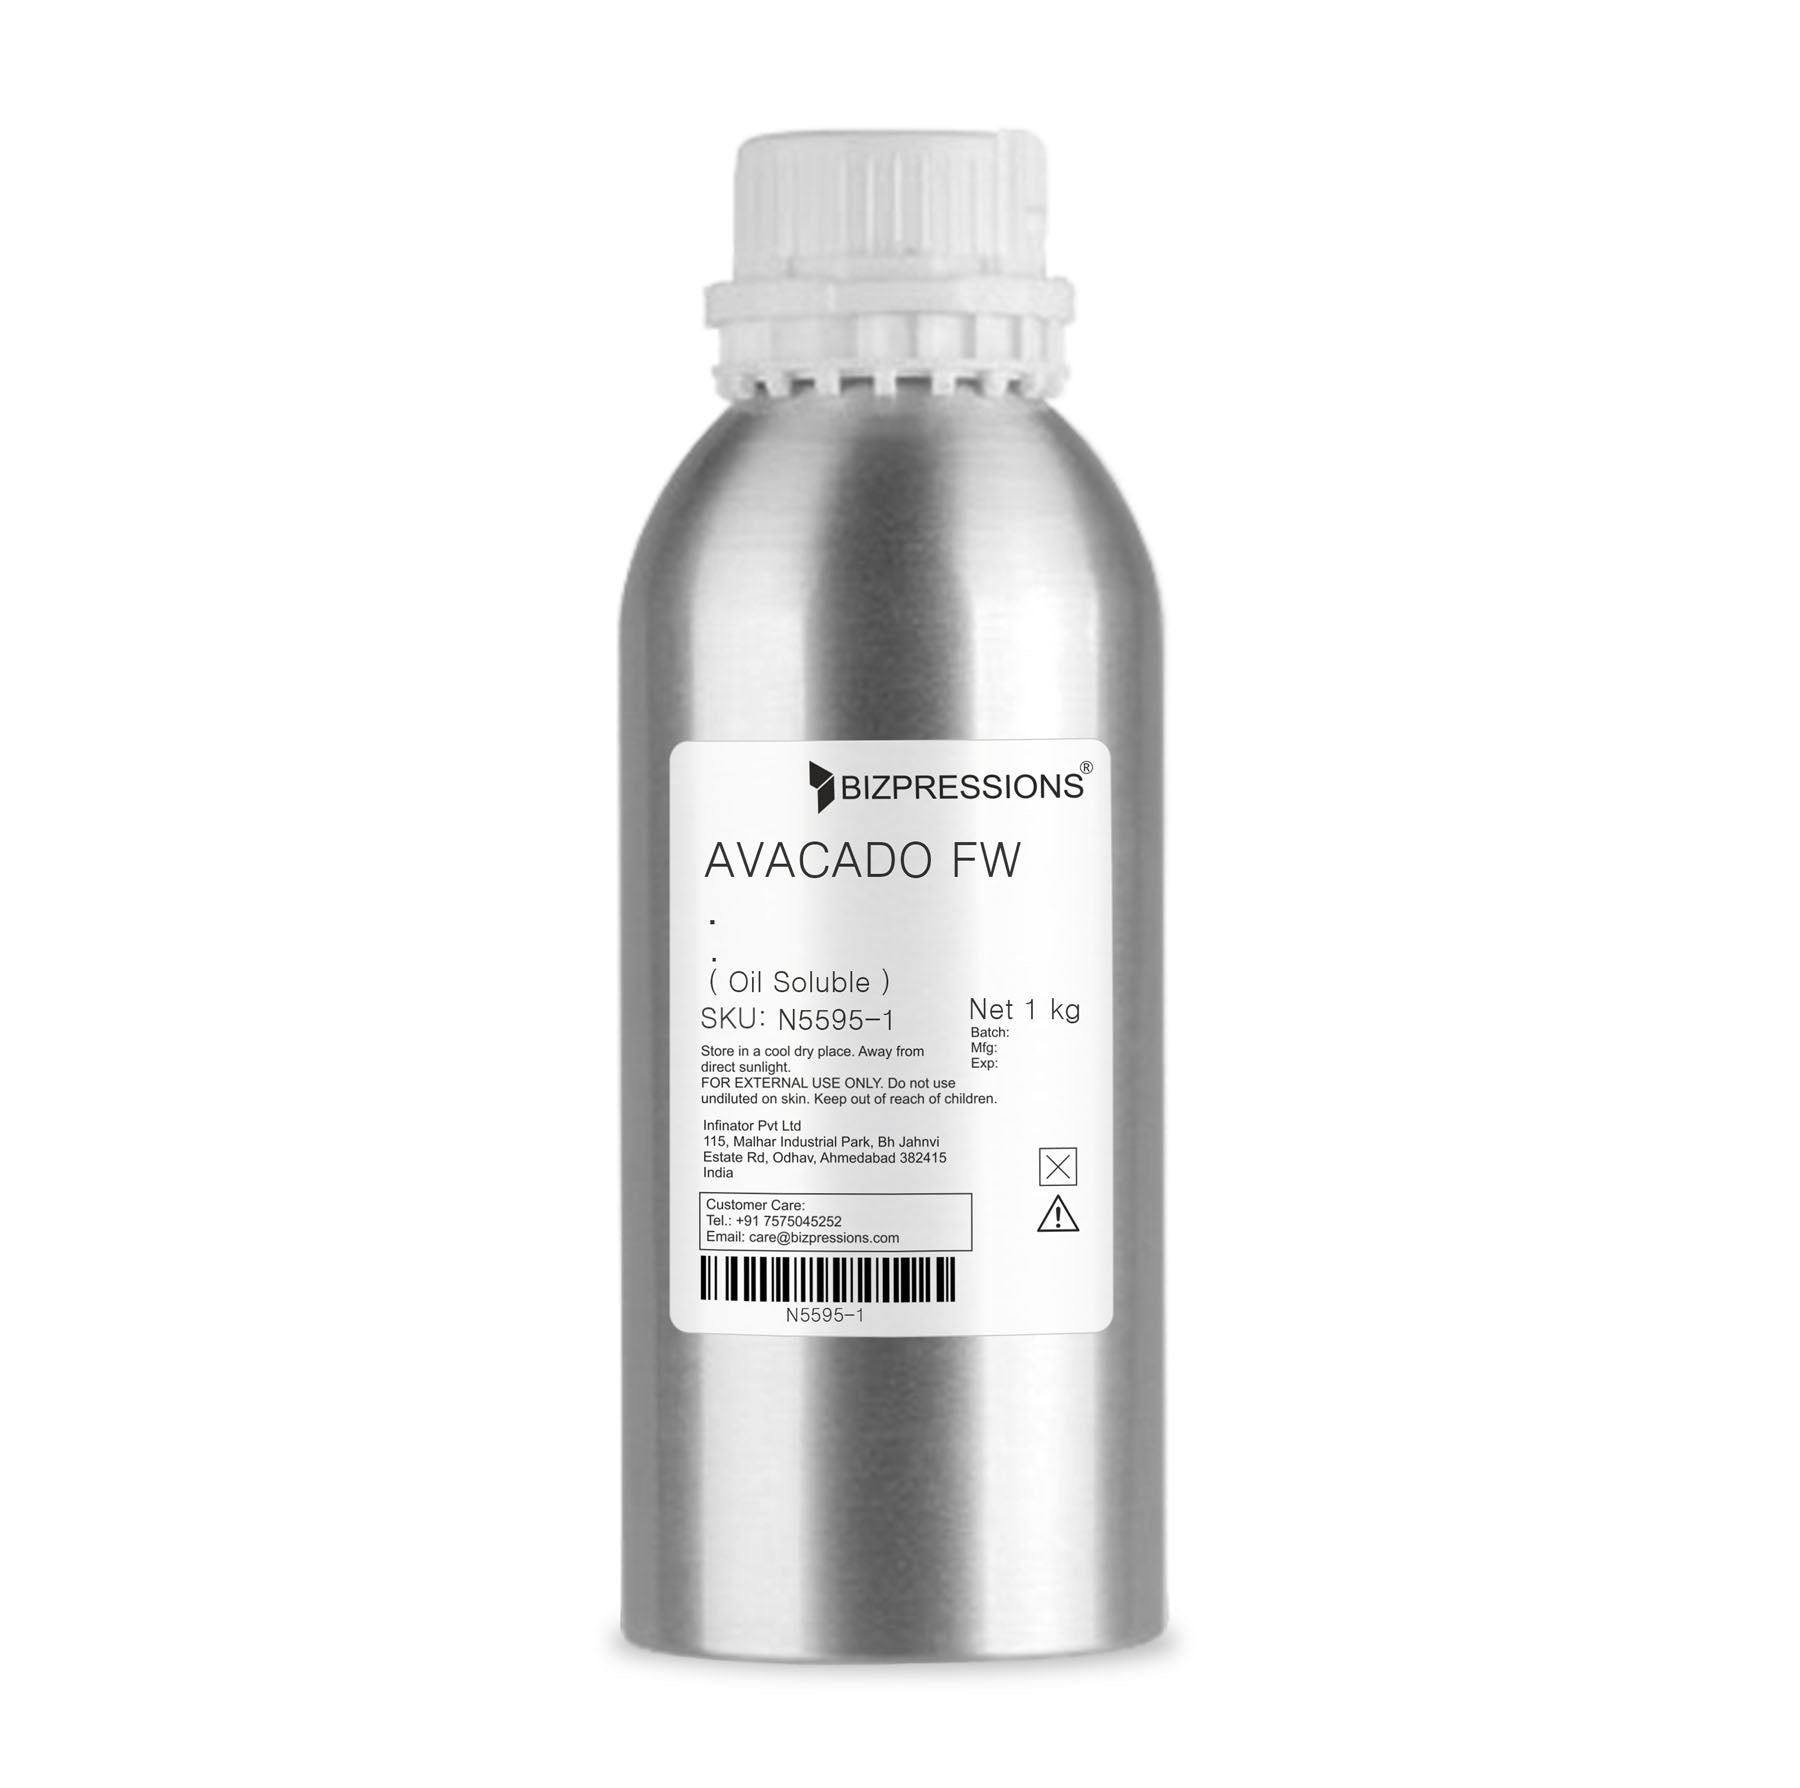 AVACADO FW - Fragrance ( Oil Soluble ) - 1 kg